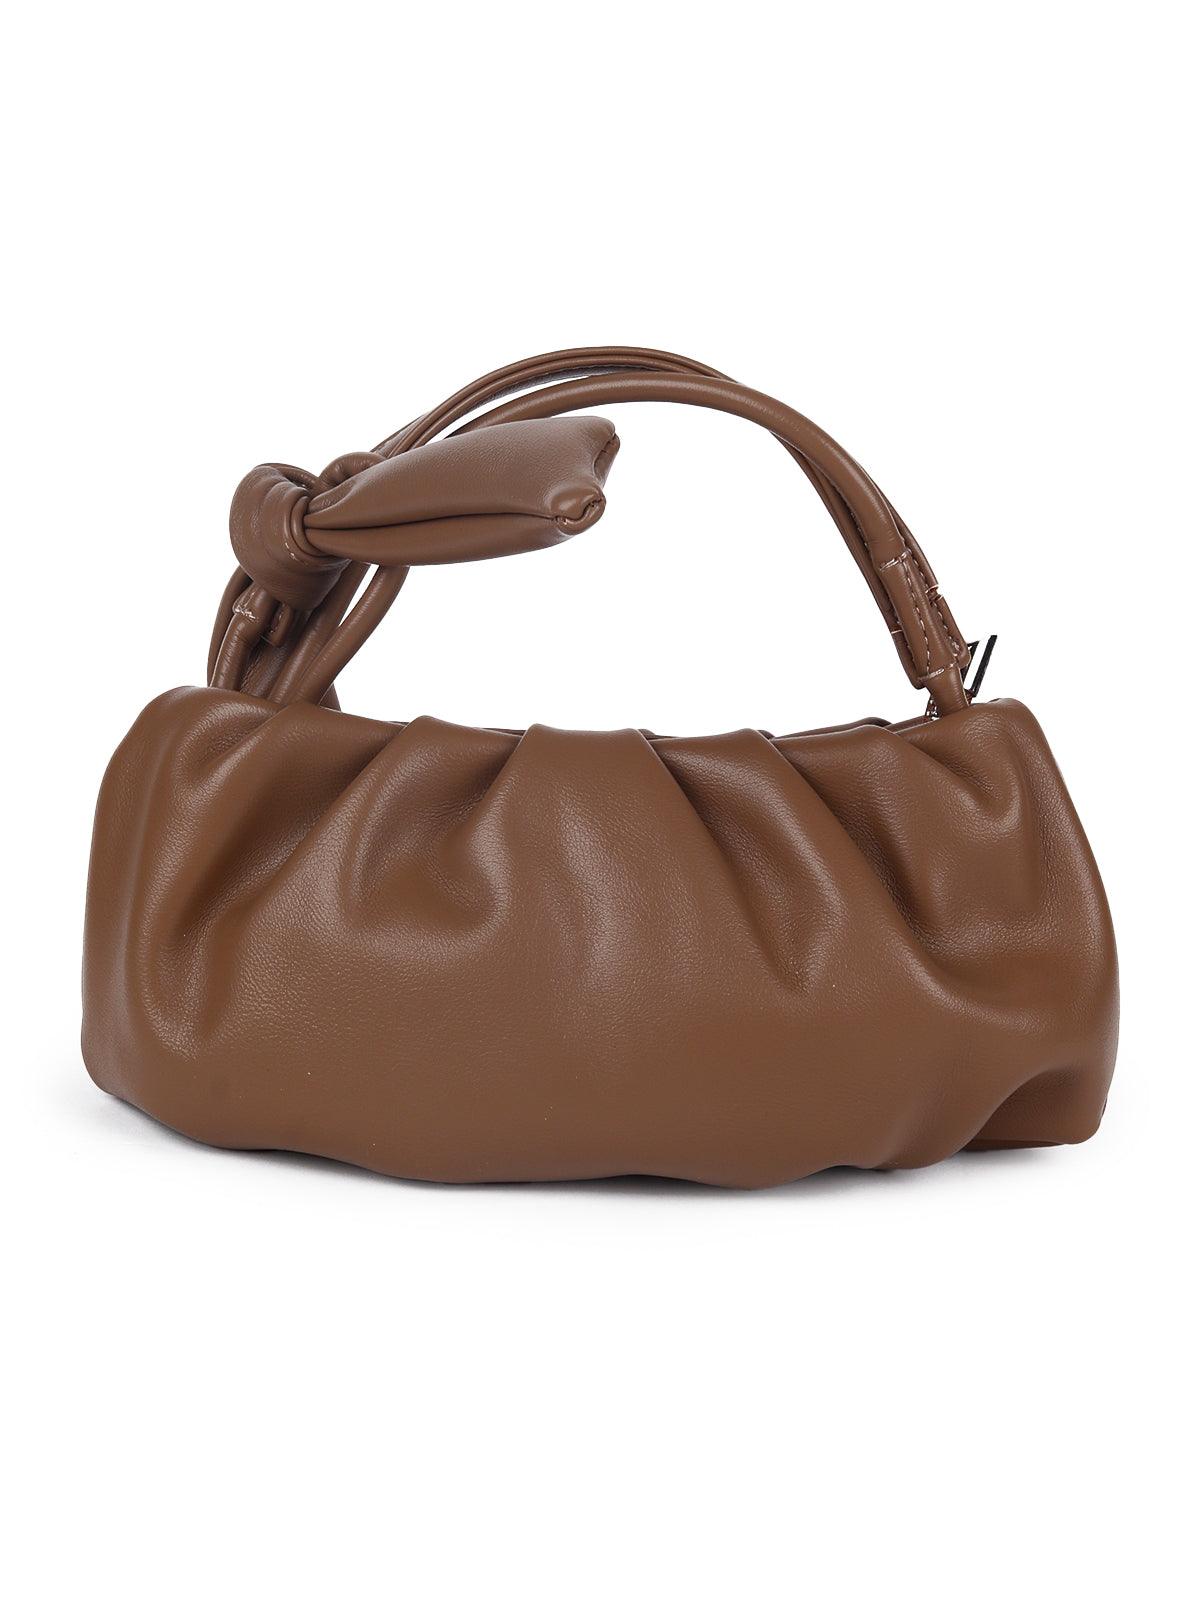 SHEIN Handbag Ruched Pouch Bag with Chainlink Strap, Tan | Pouch bag, Bags,  Handbag